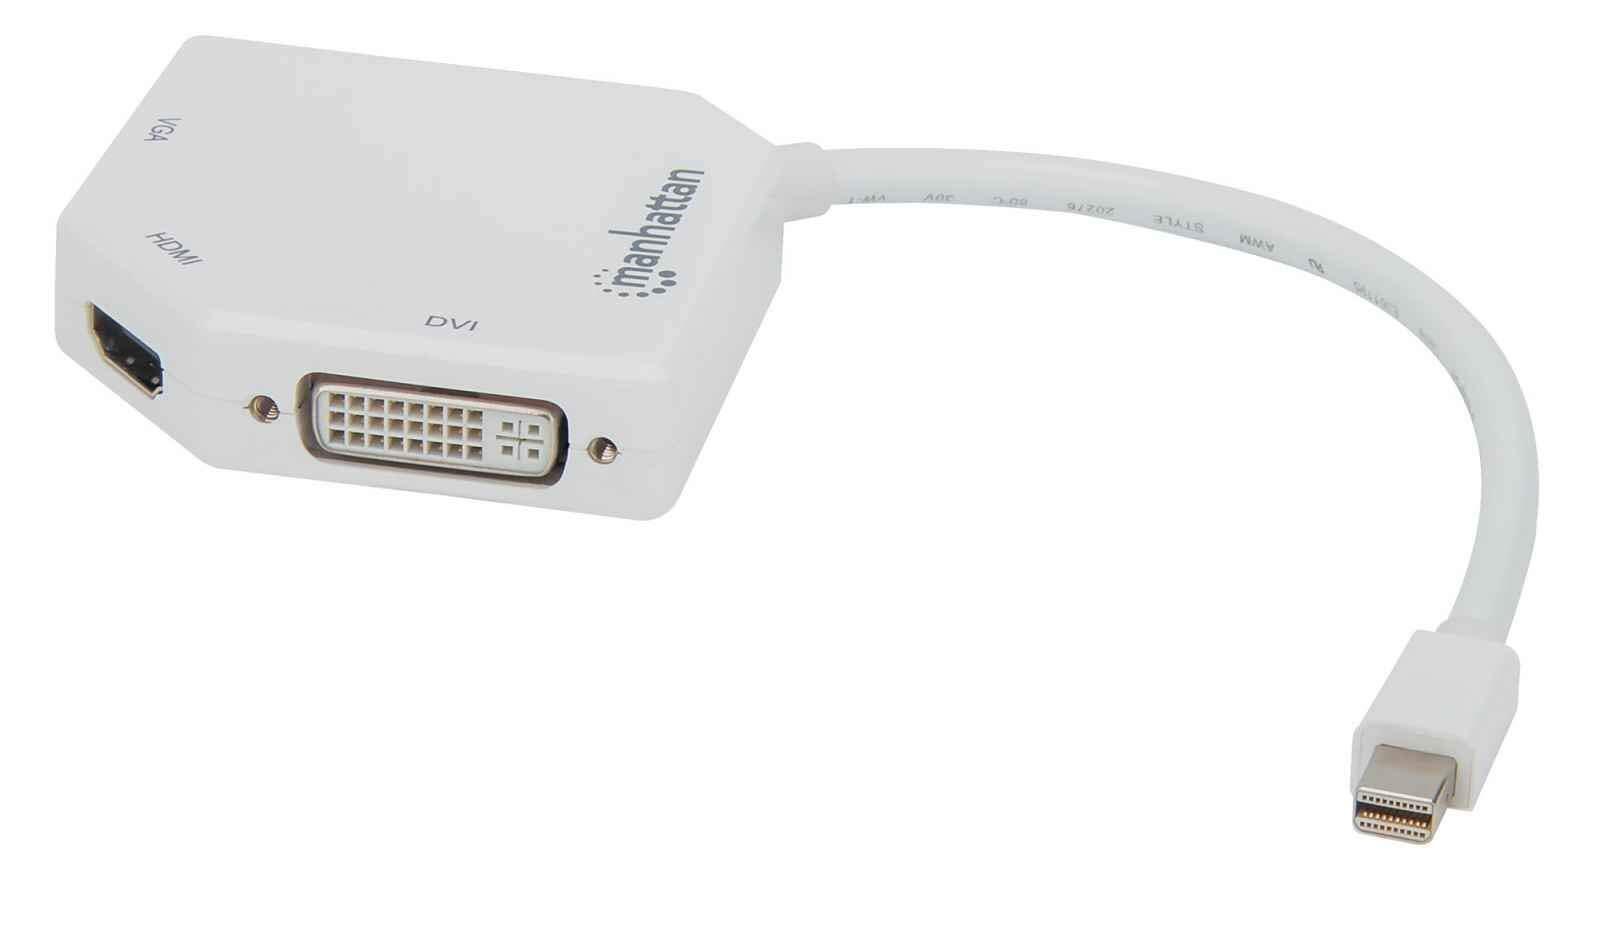 Manhattan Mini DisplayPort 1.2 to HDMI, DVI and VGA Adapter Cable (3-in-1), 25cm